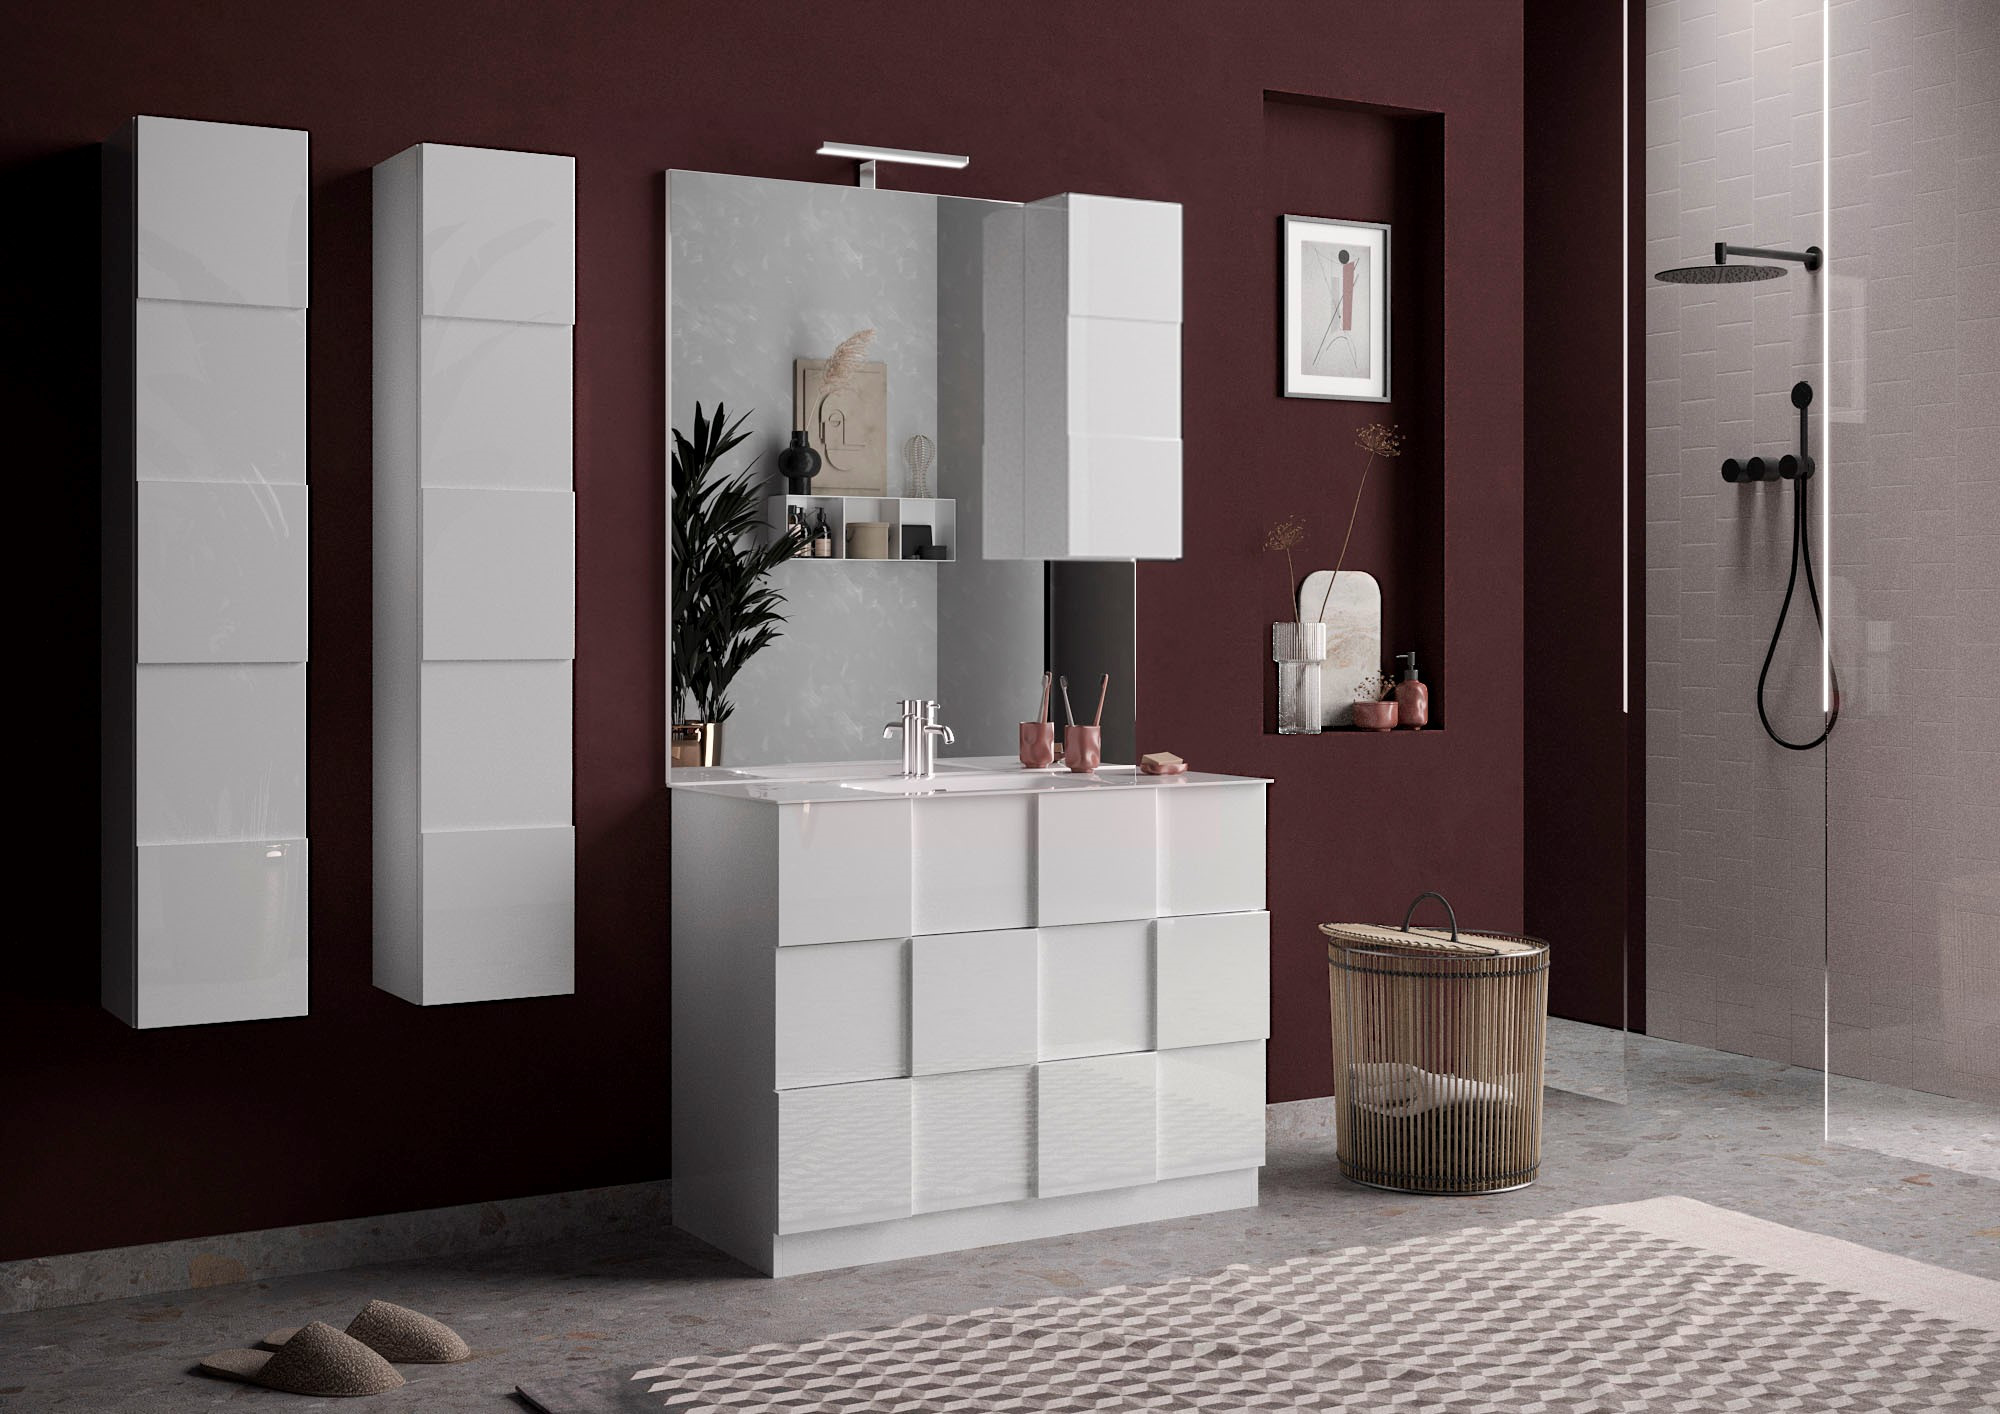 Miroir salle de bain LED 80 cm x 105 cm - ELEGANCE